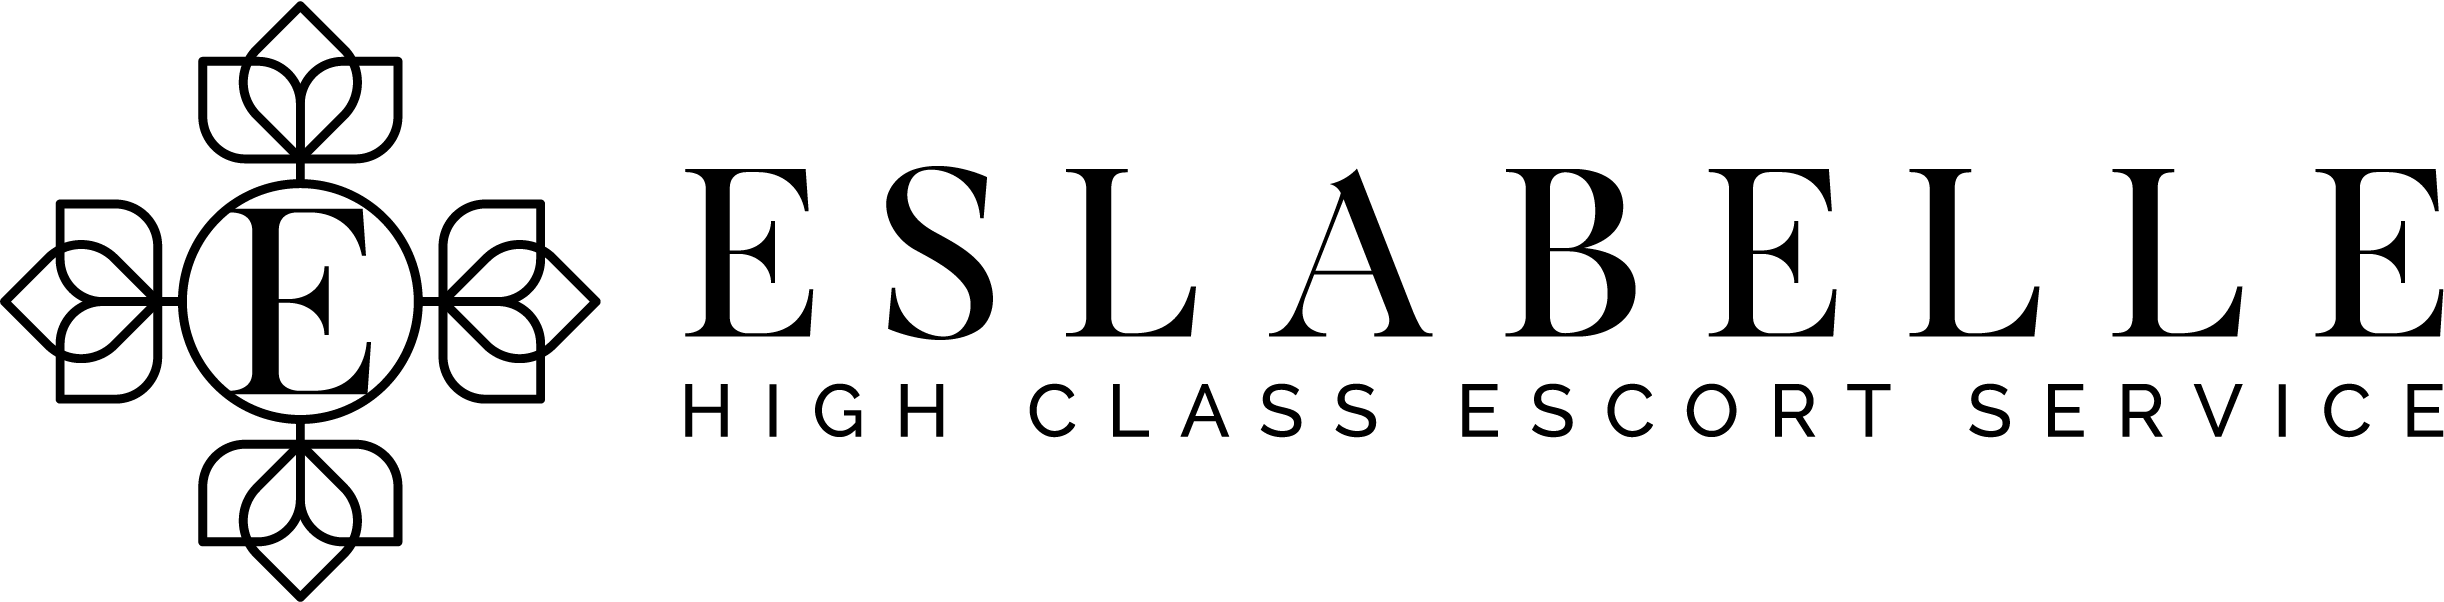 Logo Eslabelle high class escort bureau